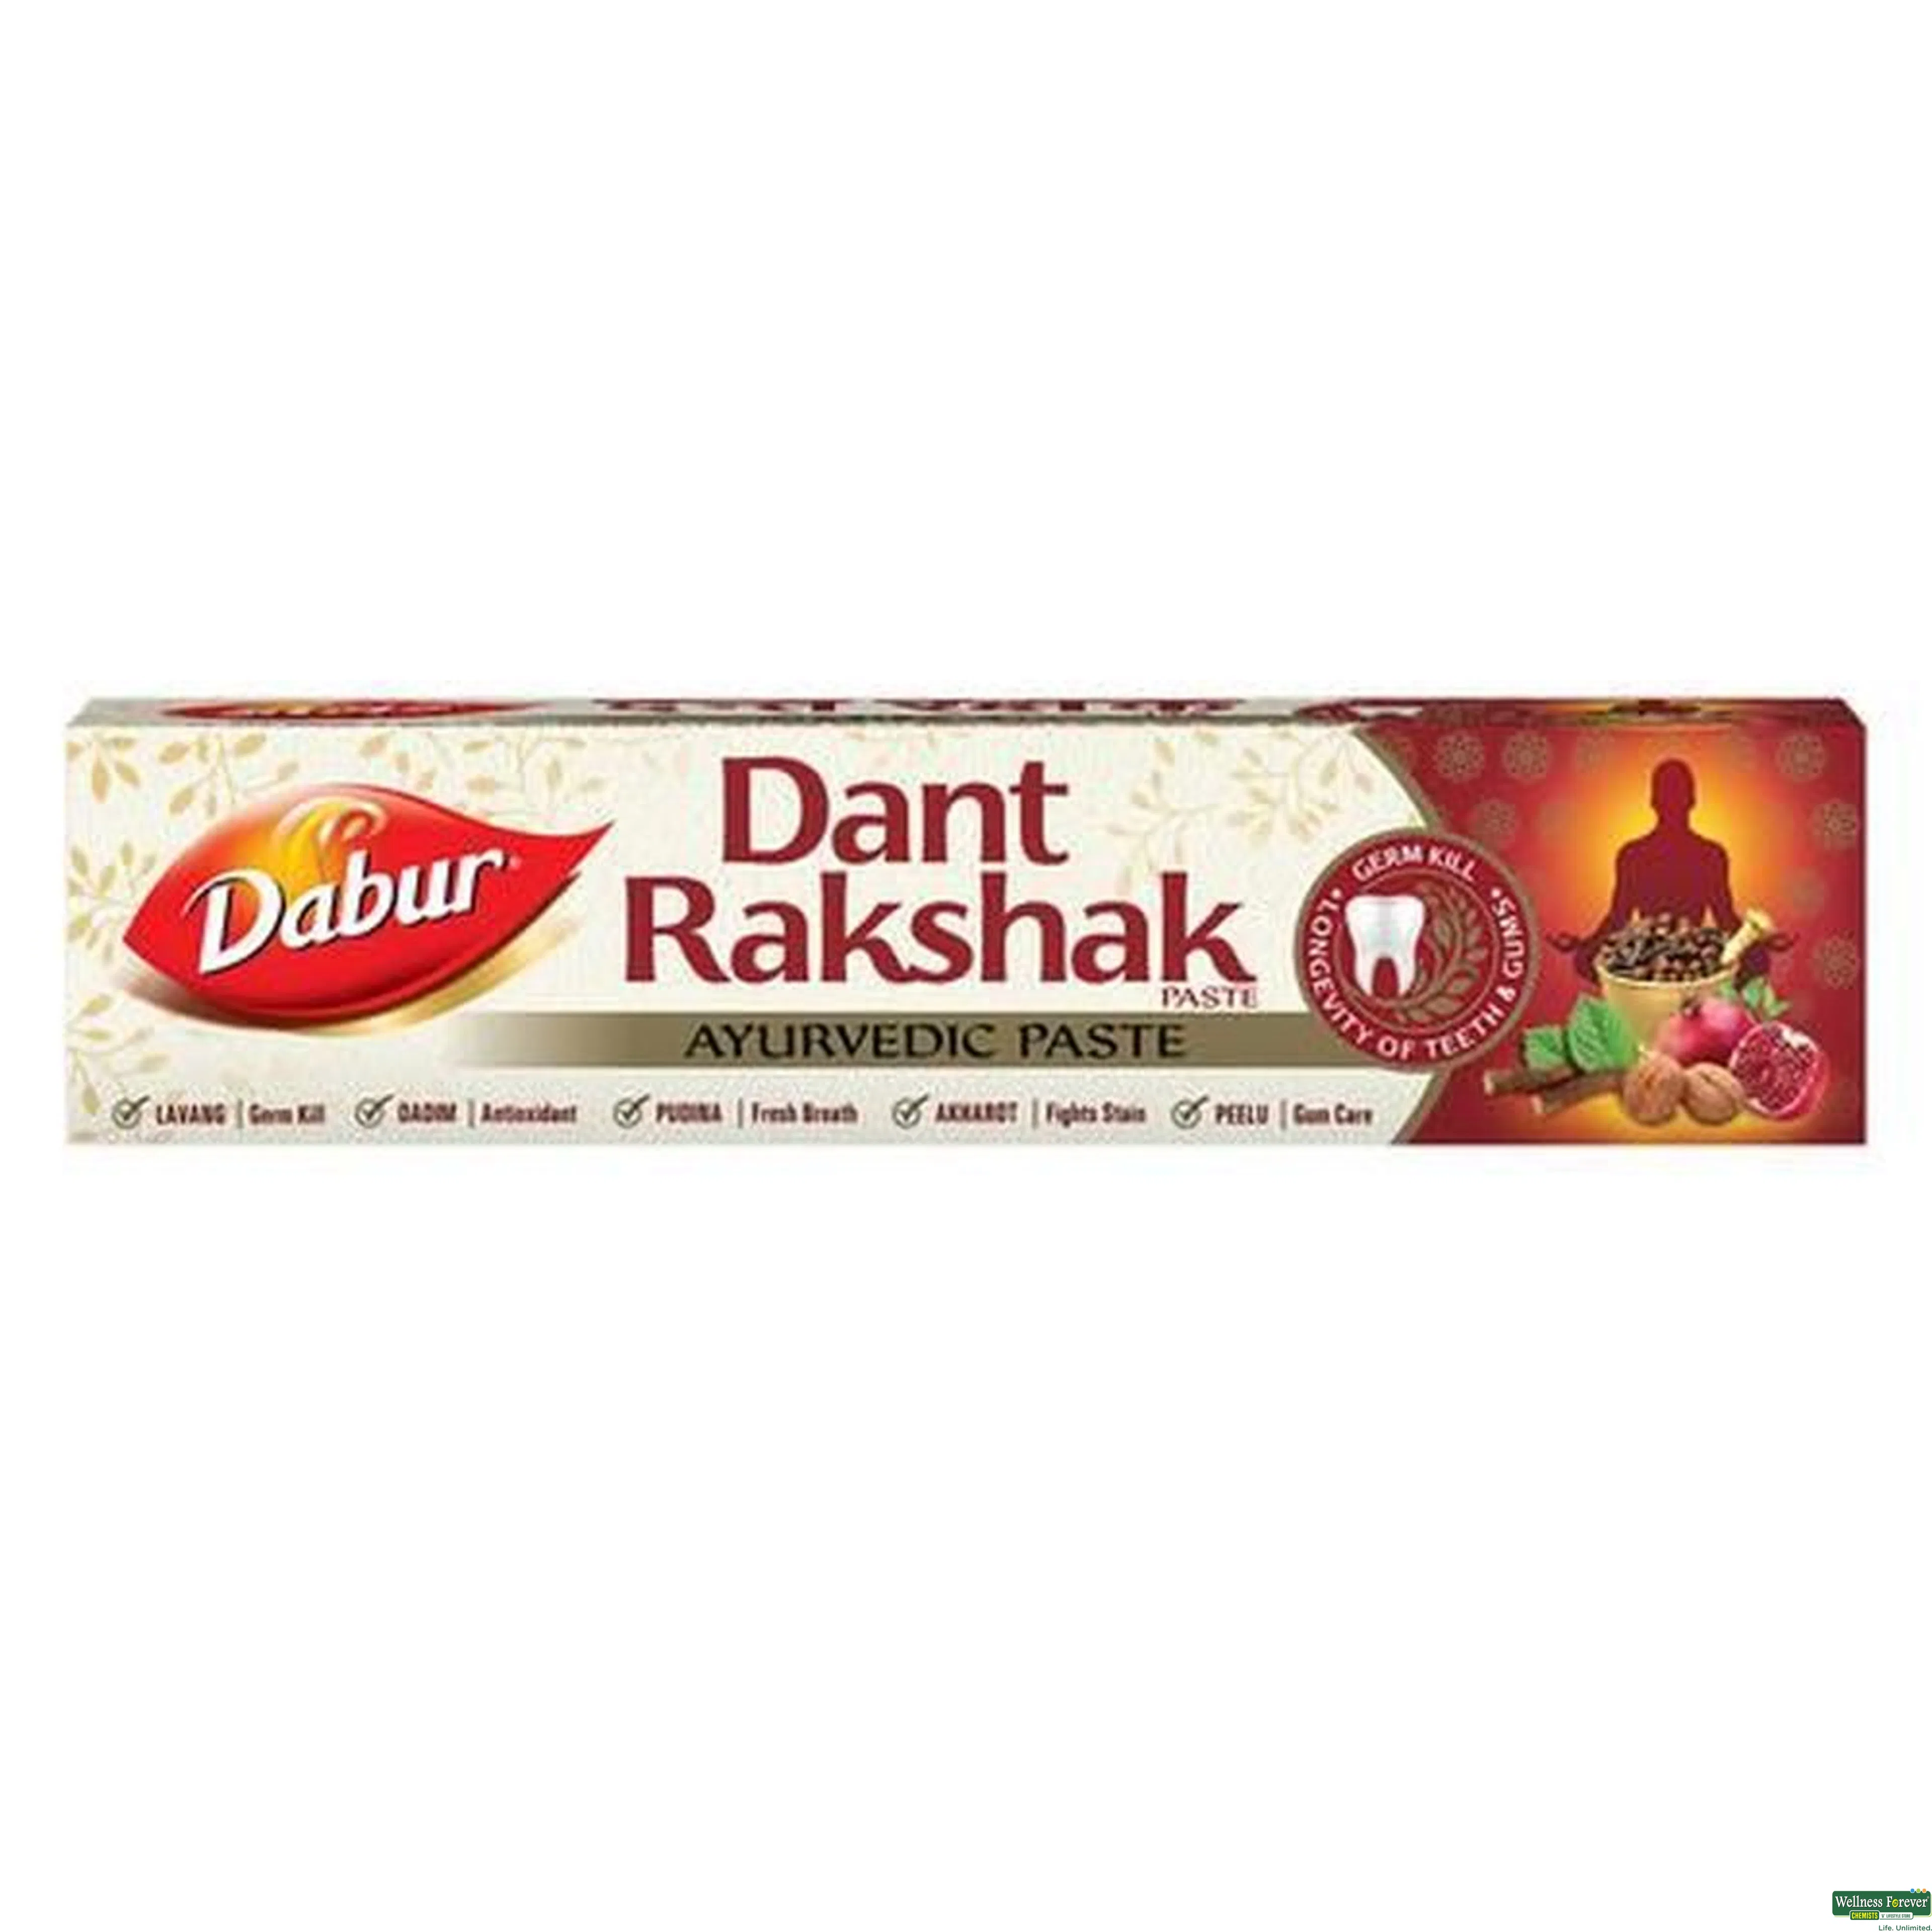 DABUR T/PASTE DANT RAKSHAK 175GM-image